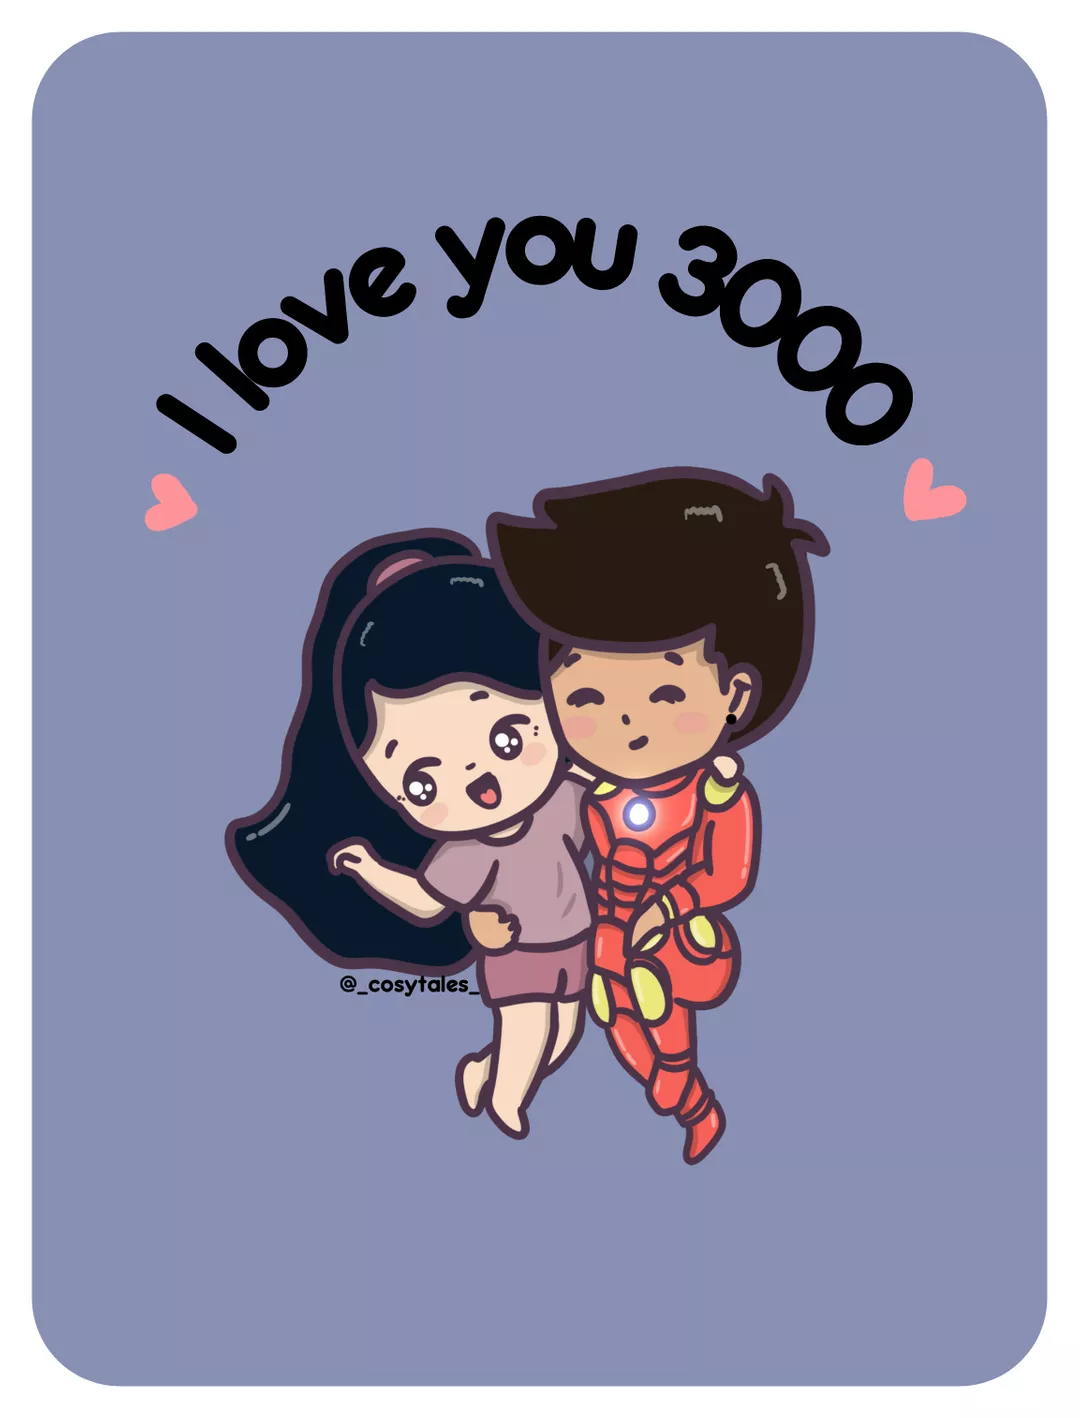 I love you 3000 ❤️